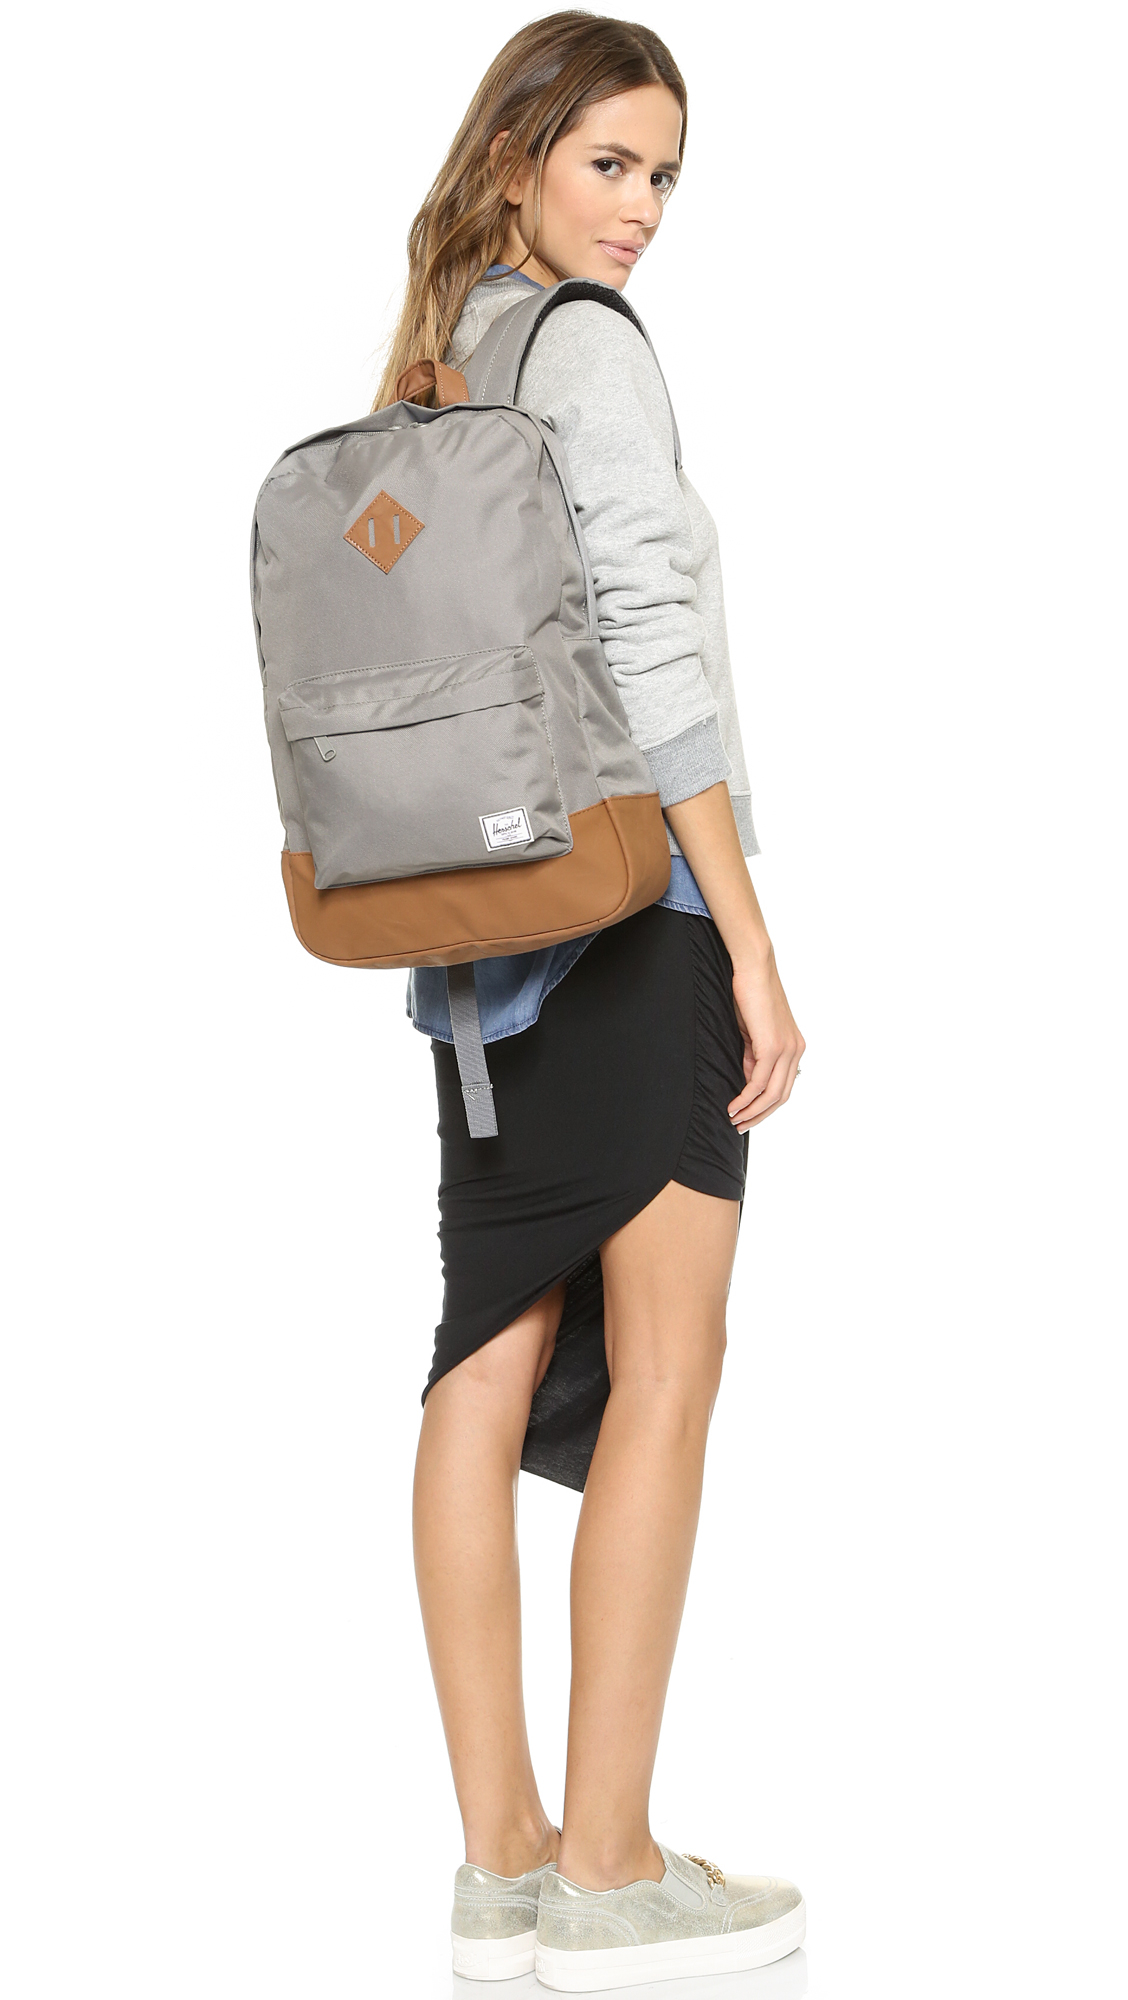 Herschel Supply Co. Heritage Backpack - Grey in Gray | Lyst